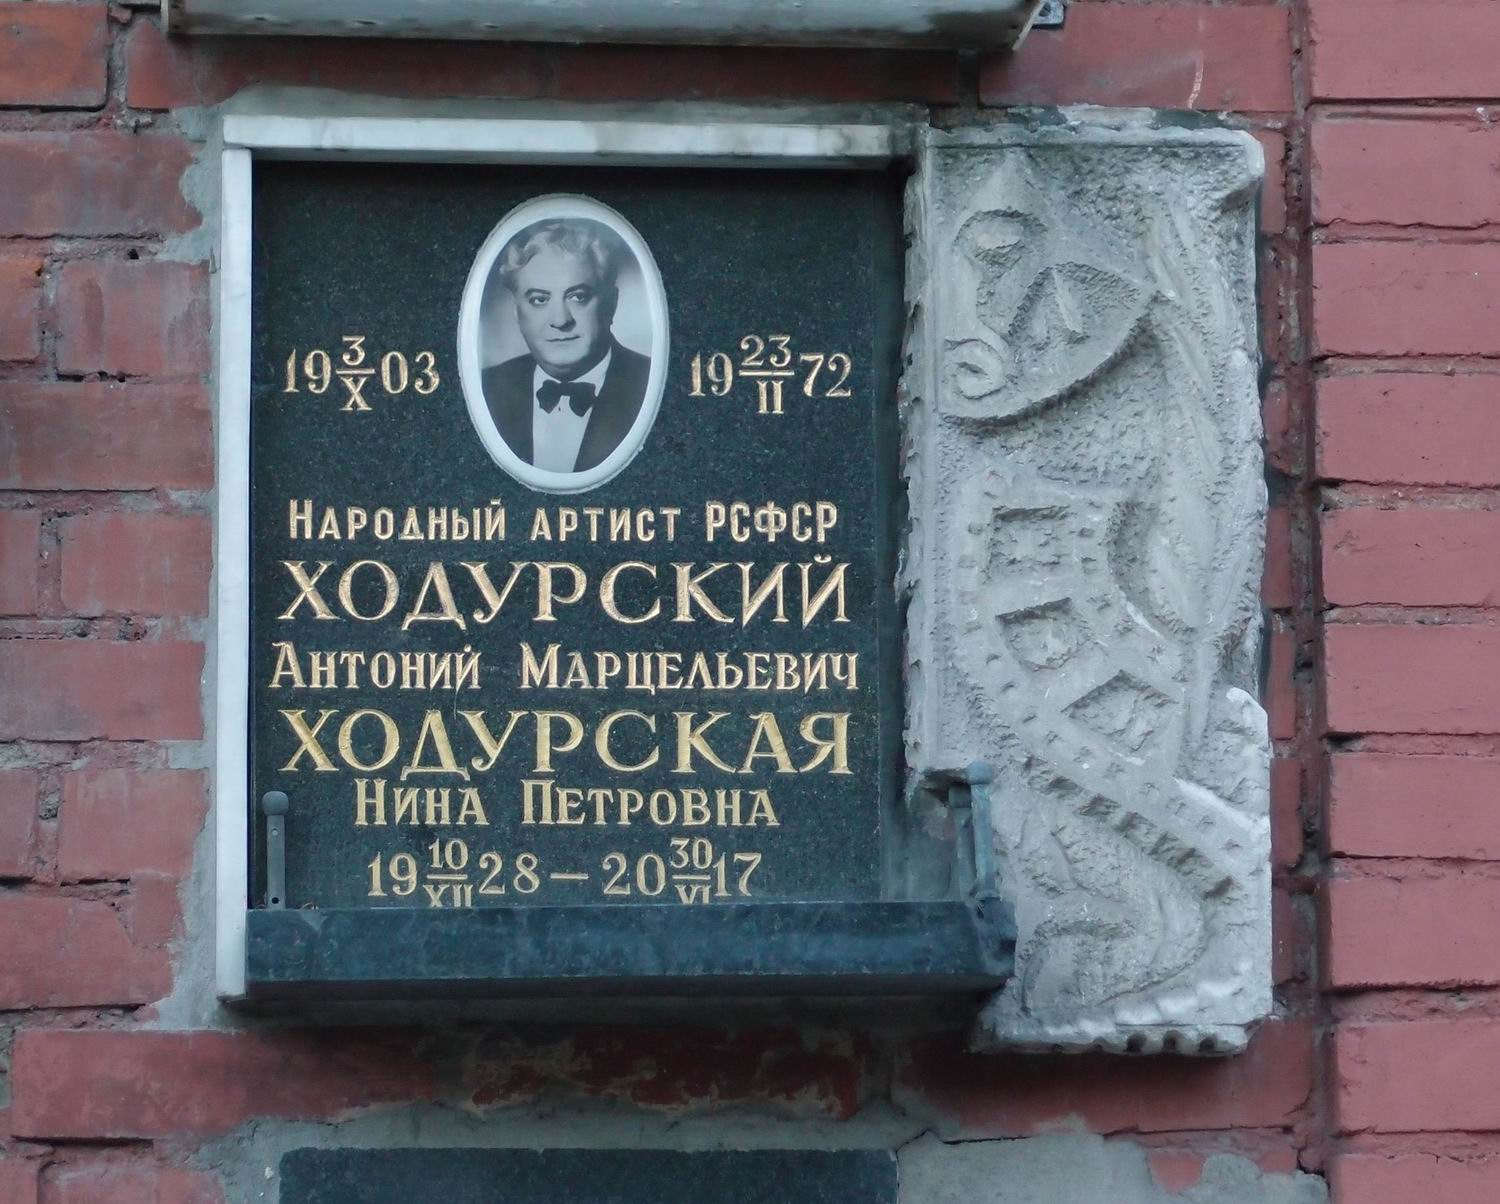 Плита на нише Ходурского А.М. (1903-1972), на Новодевичьем кладбище (колумбарий [135]-81-2).